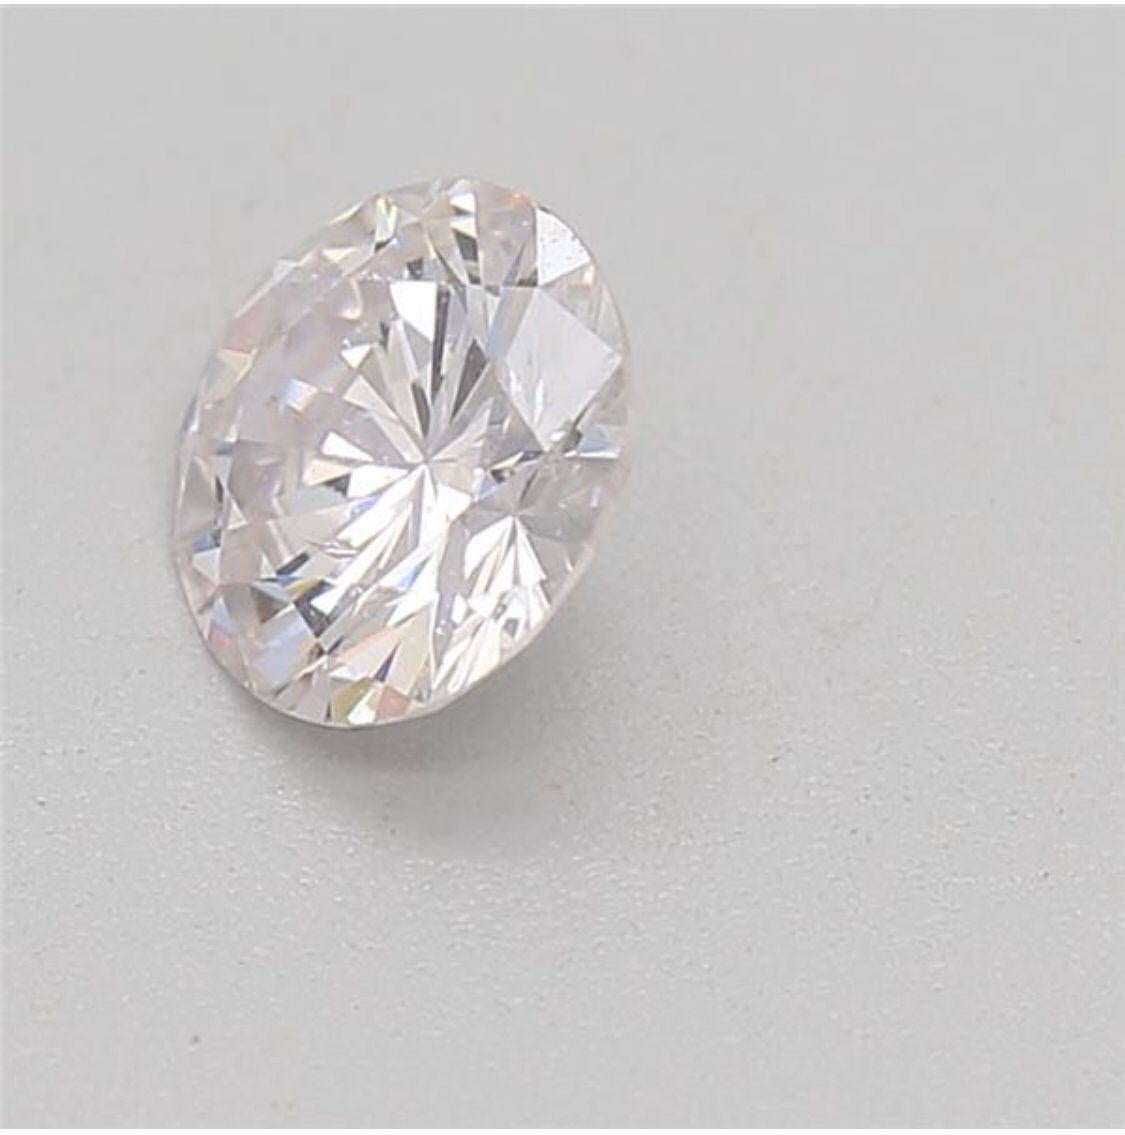 Diamant rose pâle taille ronde de 0,31 carat de pureté SI1 certifié CGL en vente 8